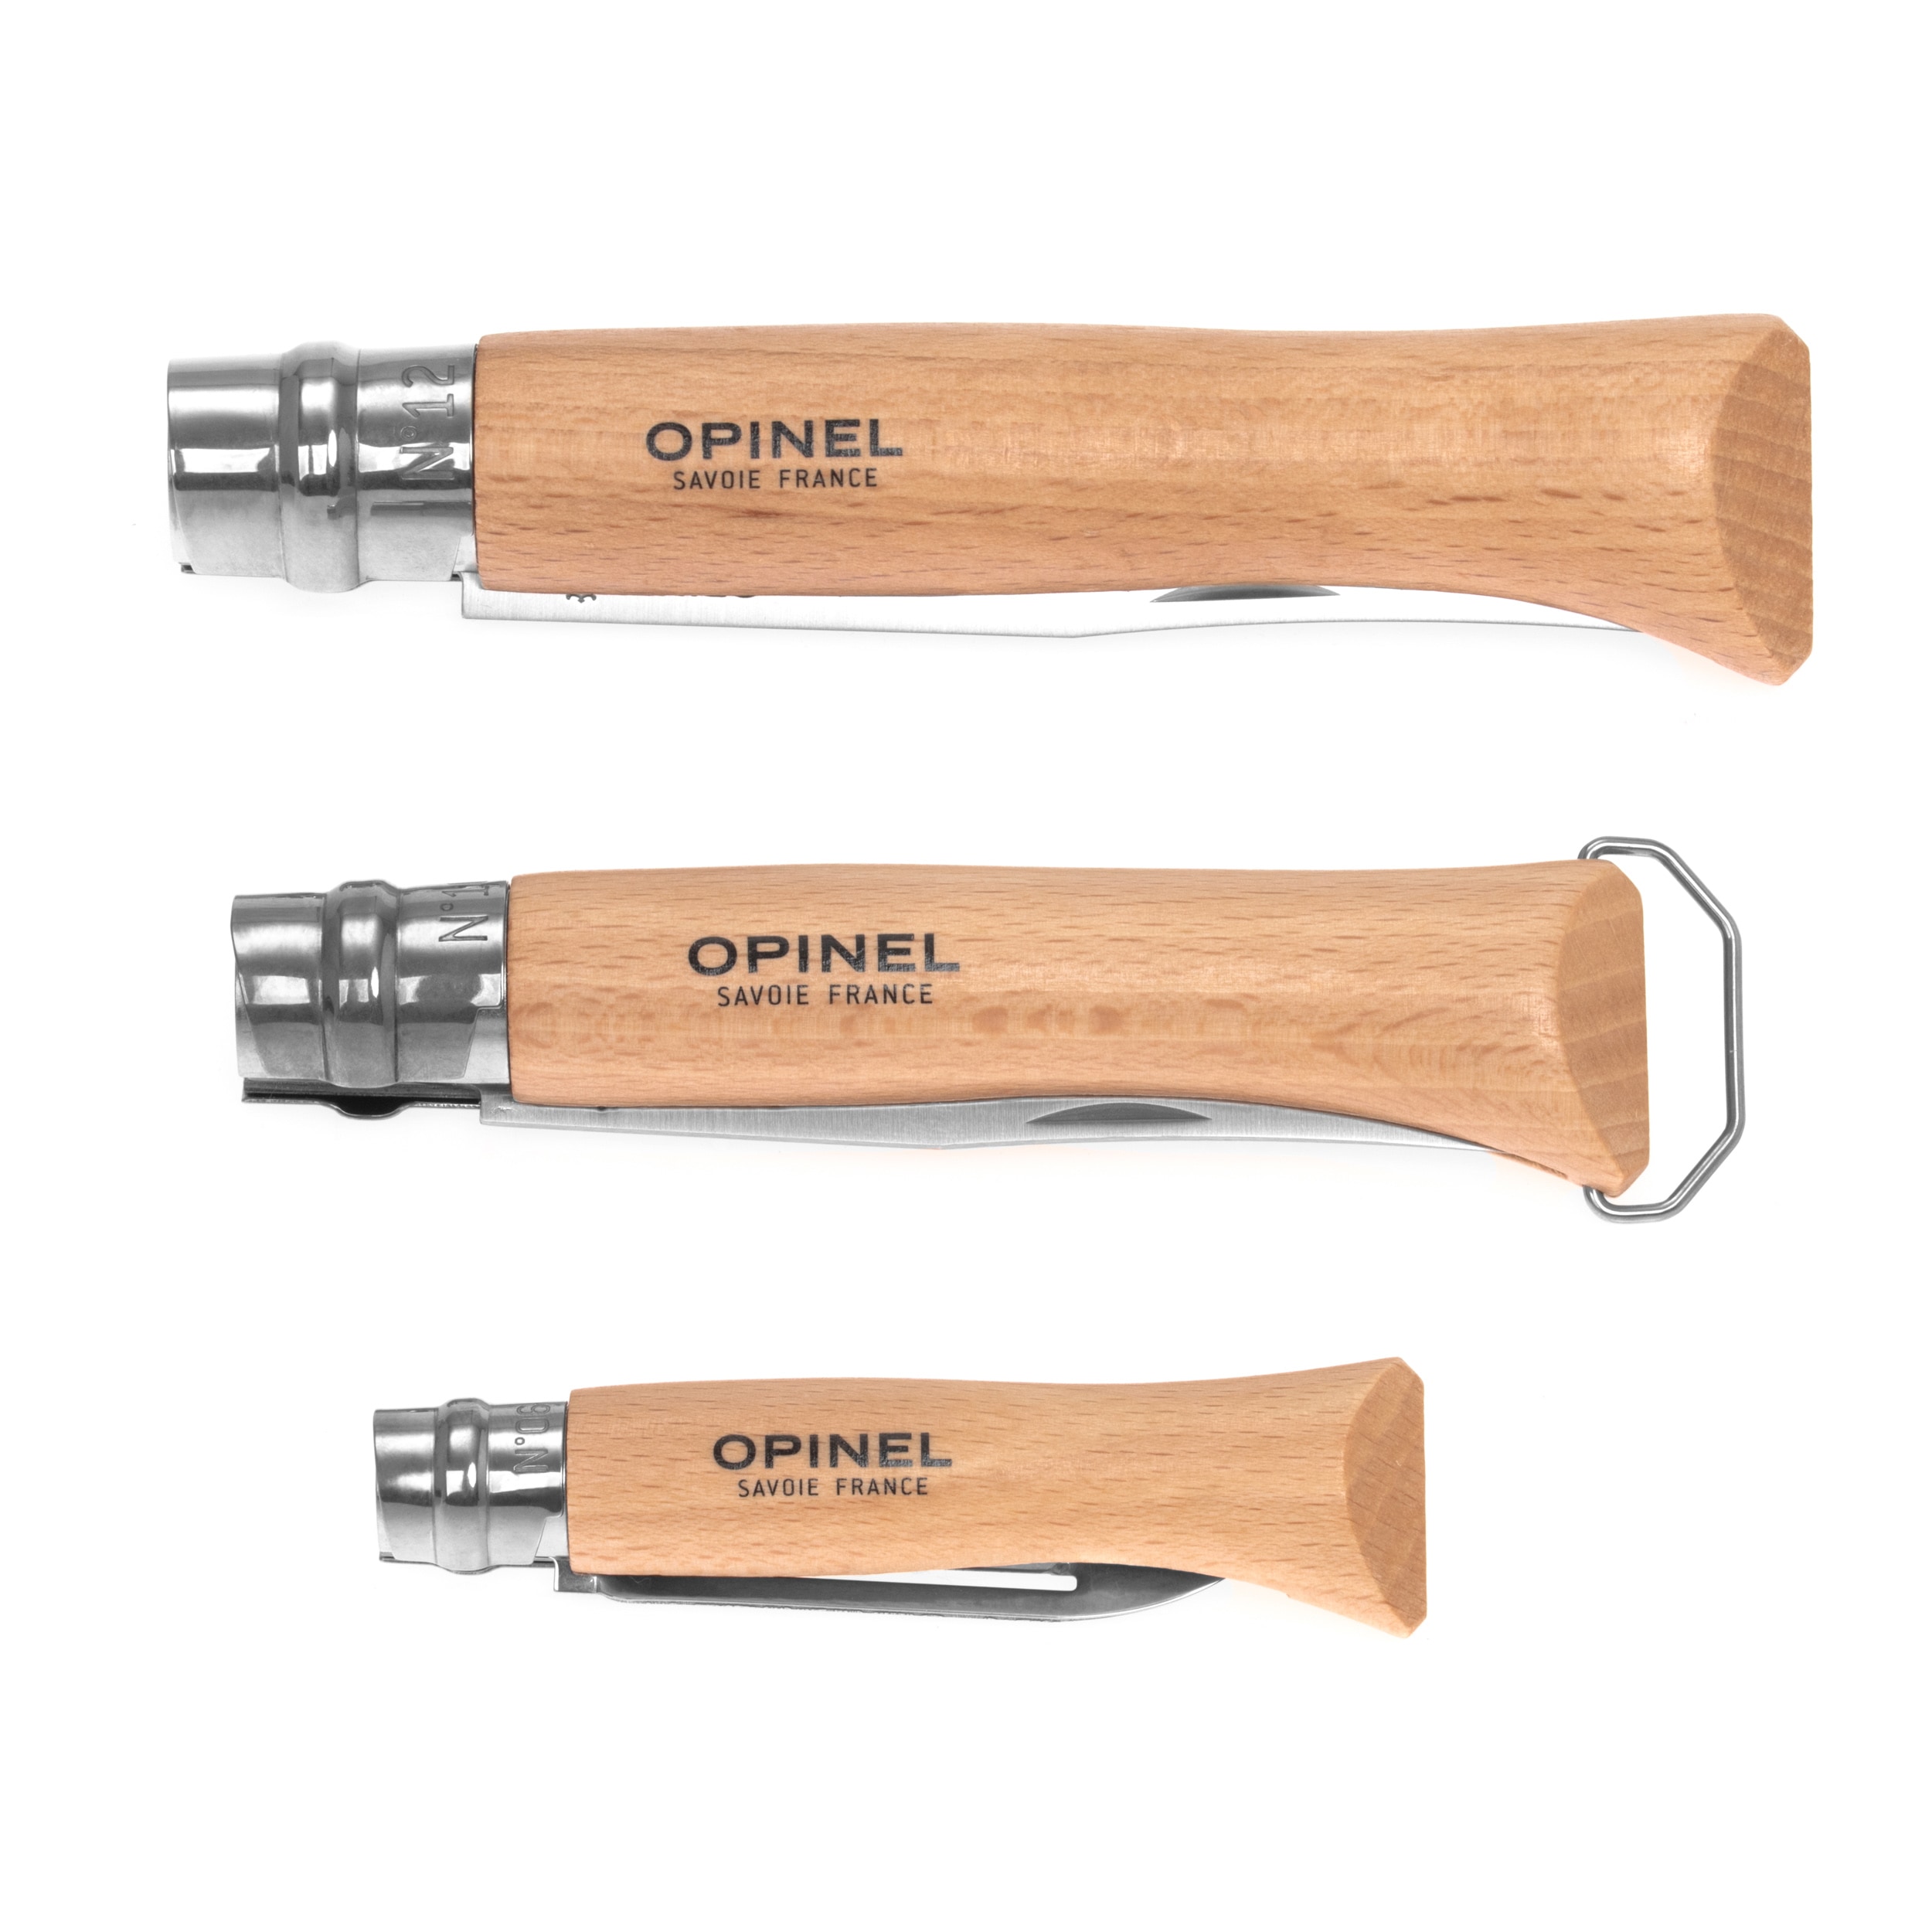 Zestaw noży kuchennych Opinel Nomad Cooking Kit